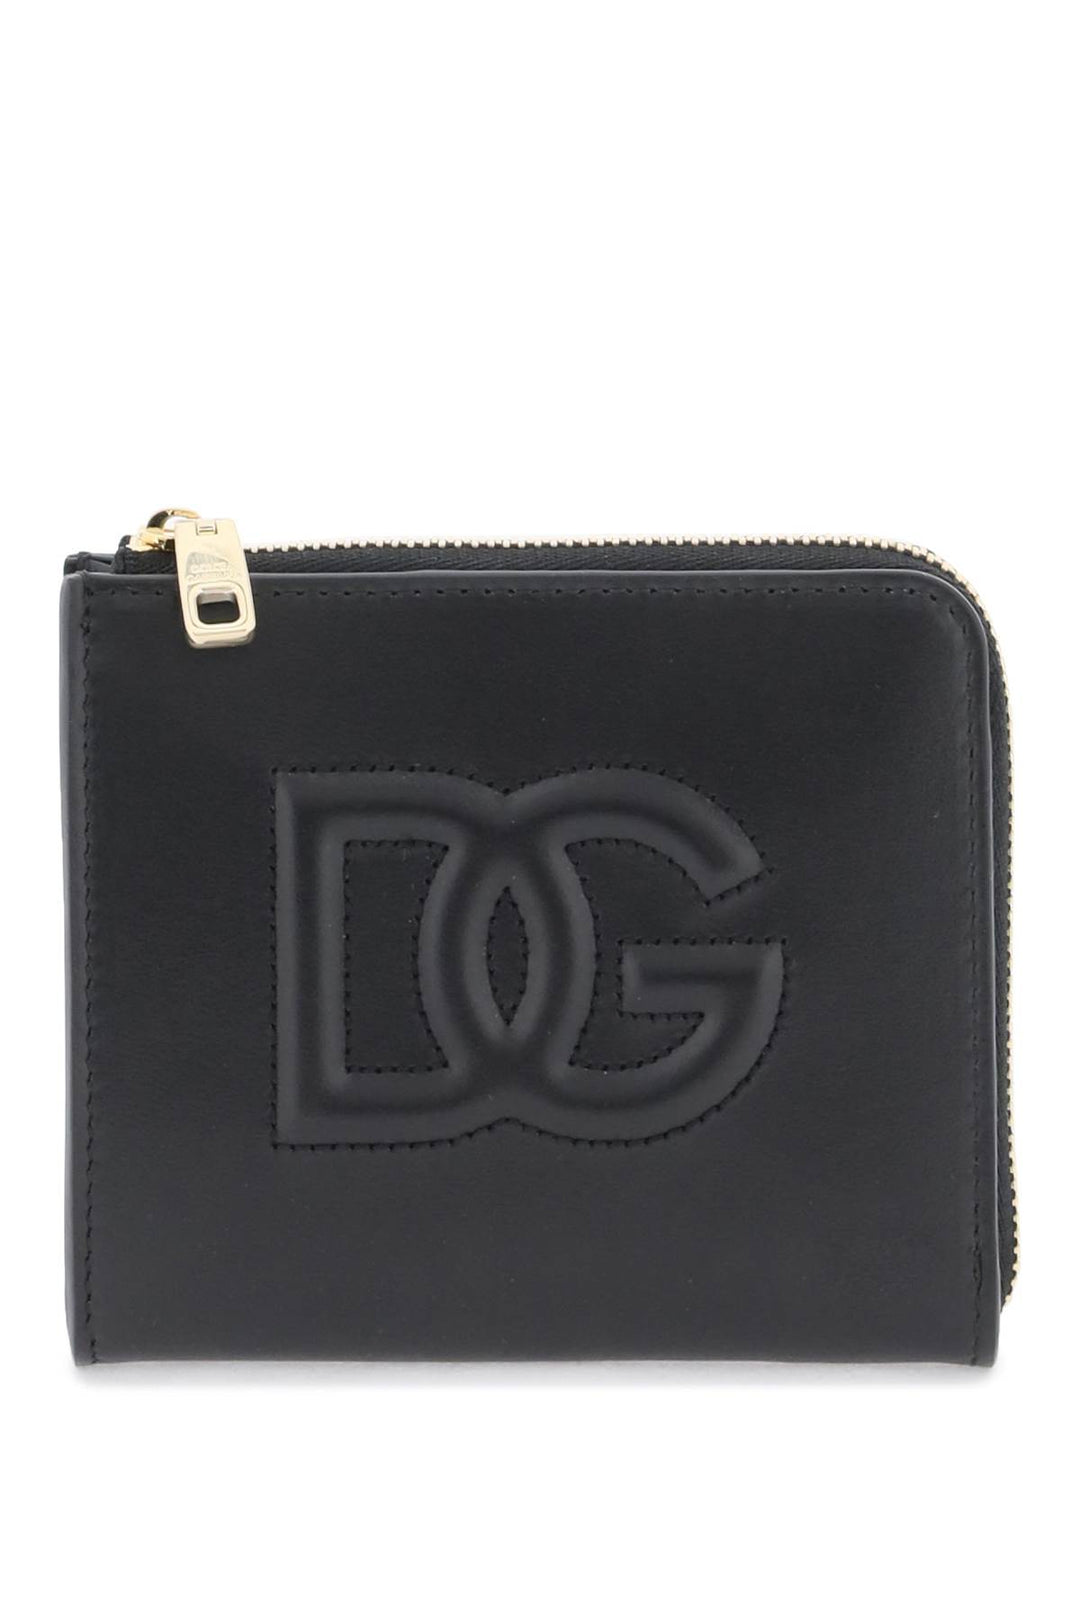 Dolce & Gabbana Dg Logo Wallet   Nero